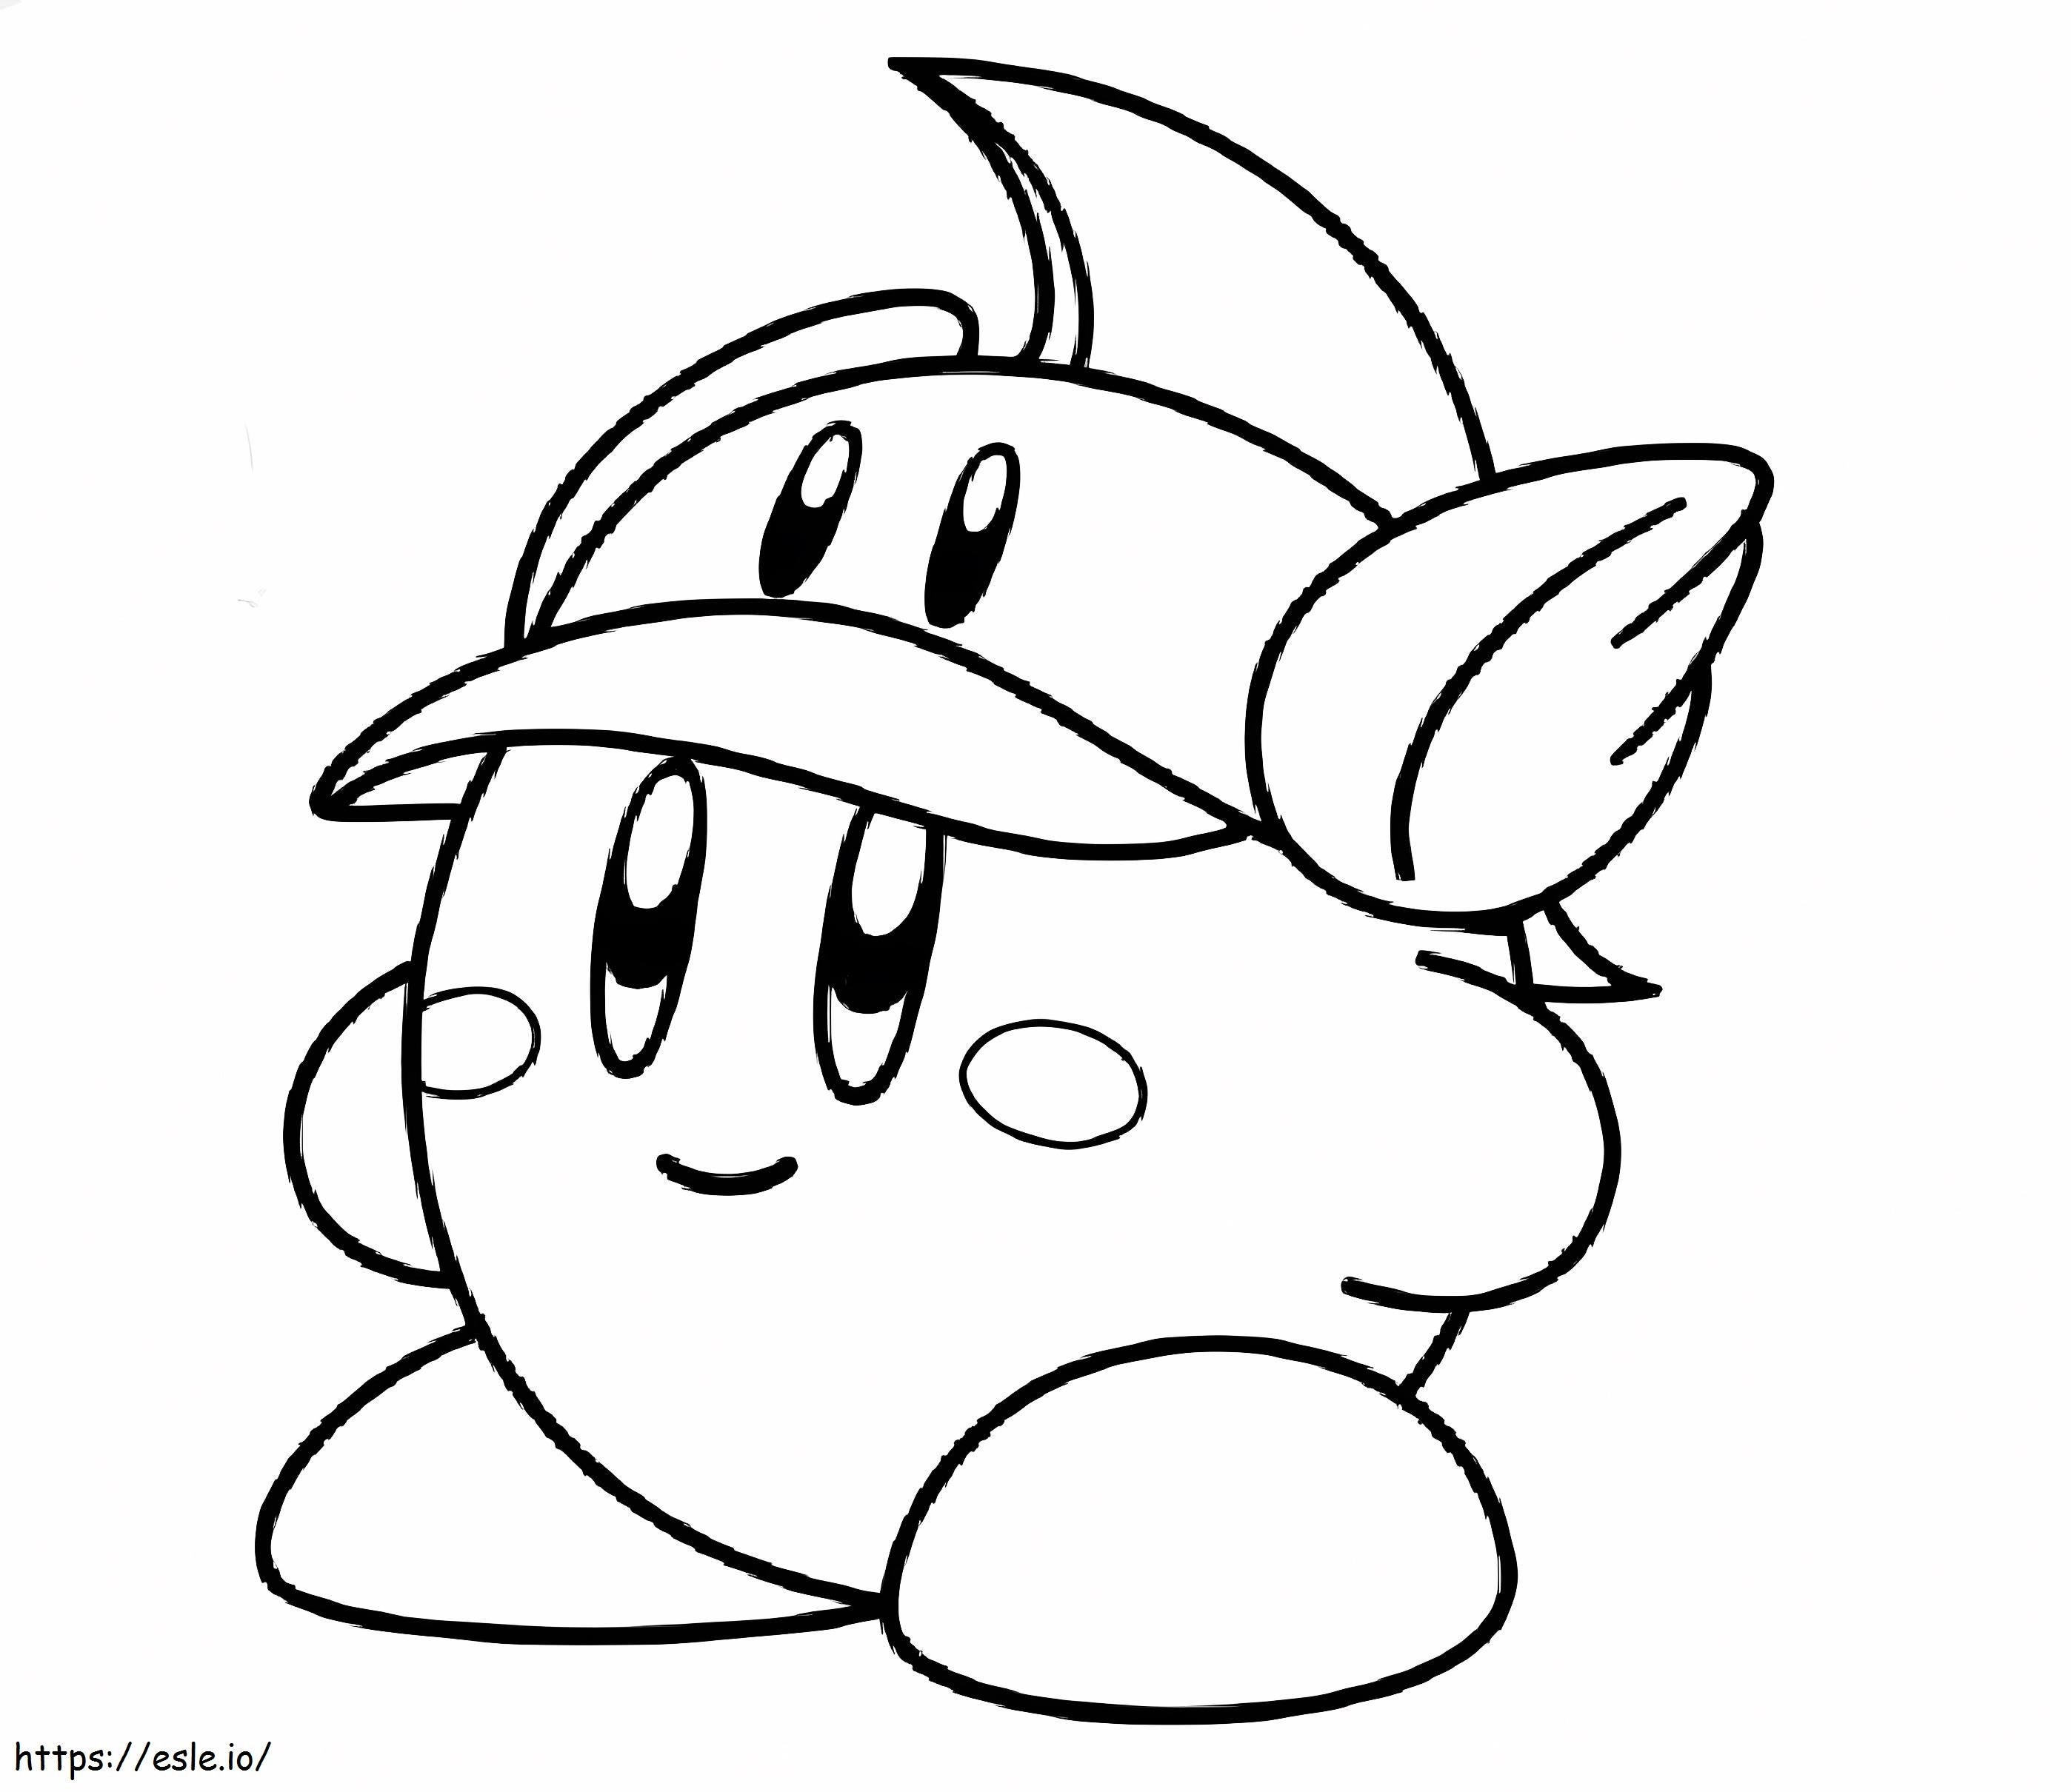 Kirby para imprimir gratis para colorear